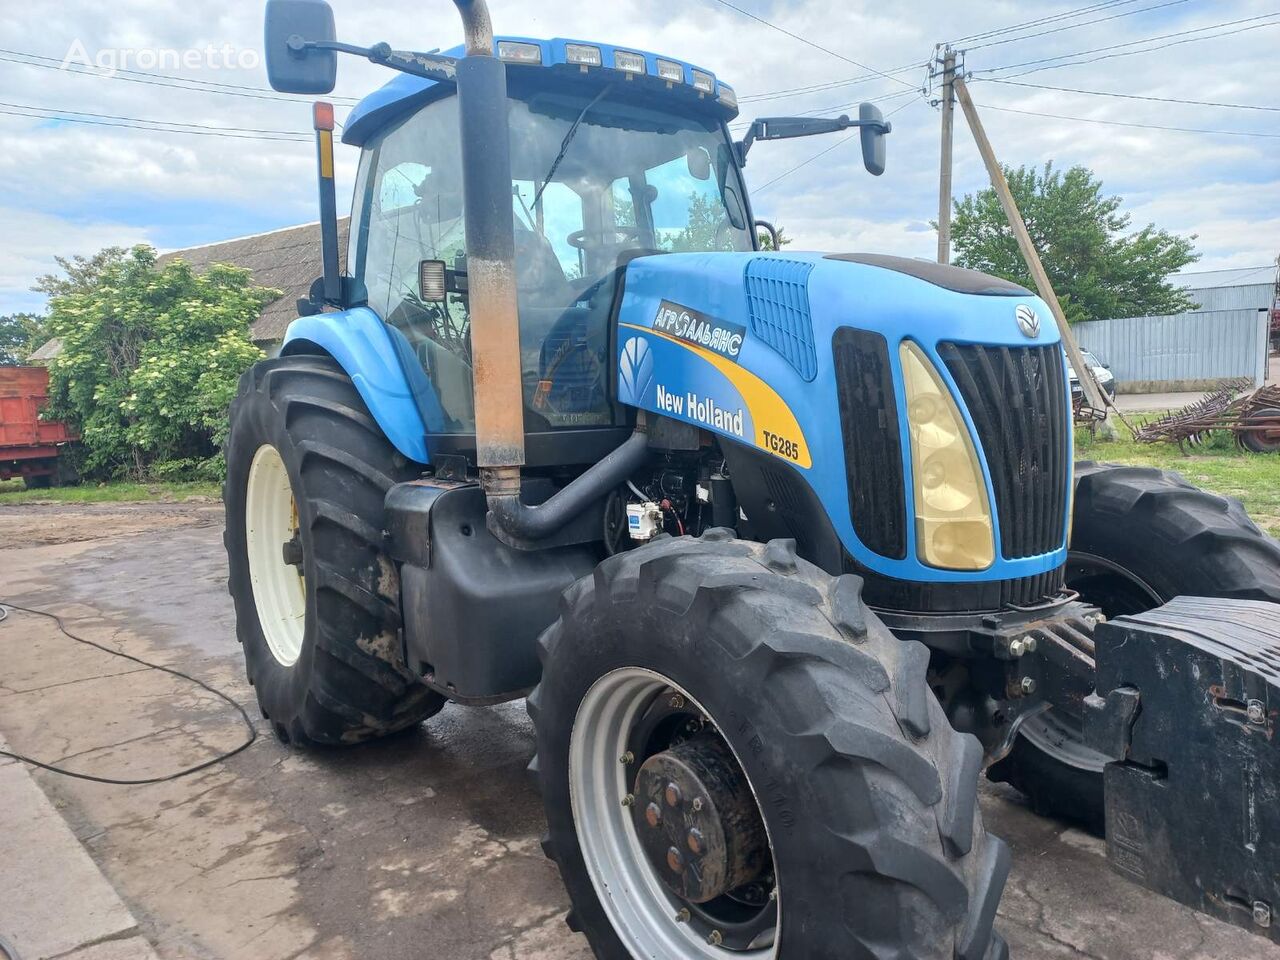 New Holland TG 285 wheel tractor